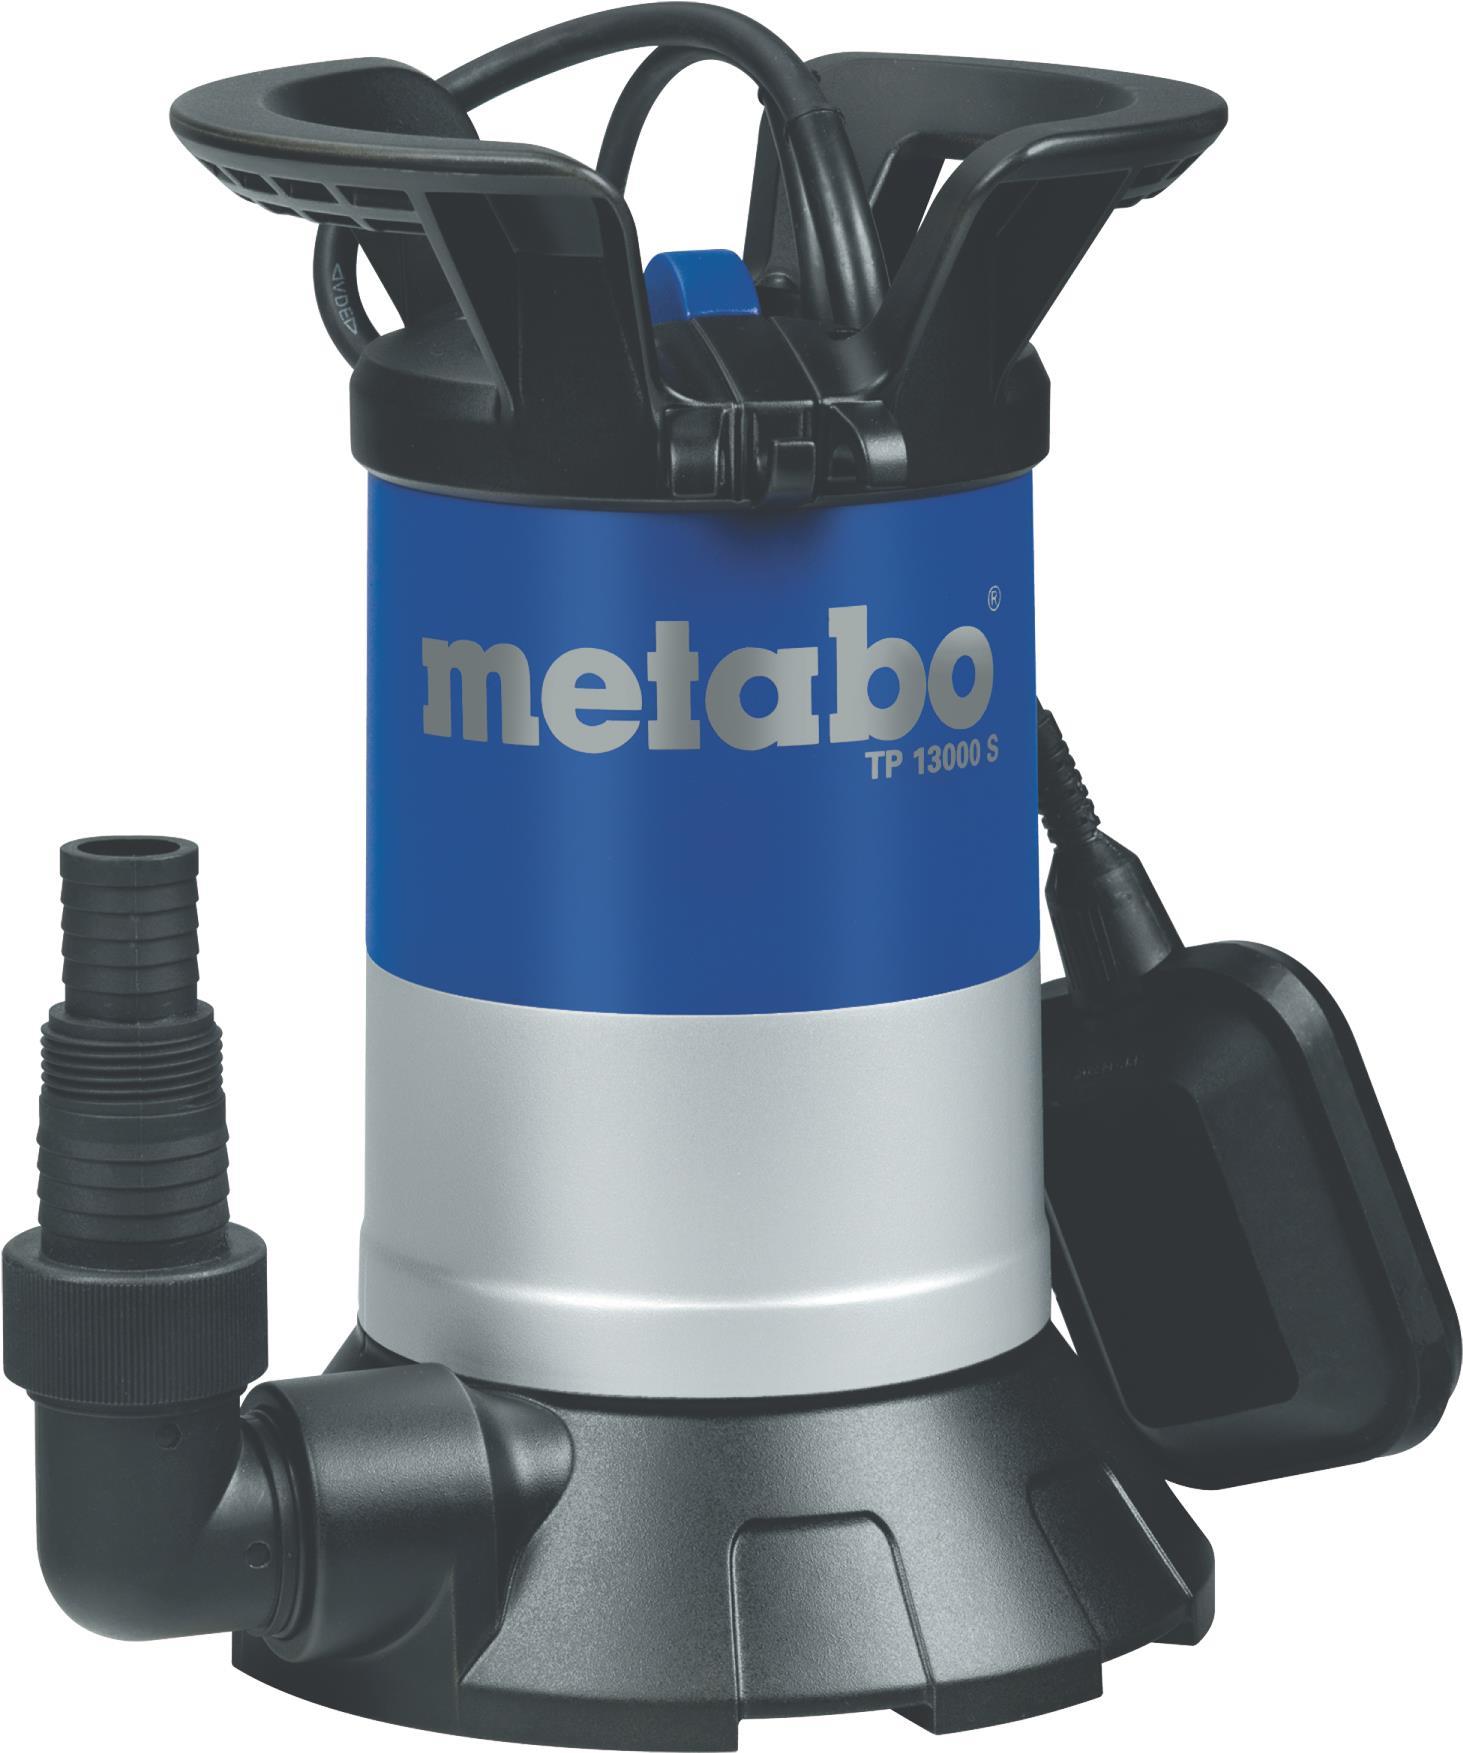 Metabo 251300000 Metabo Klarwasser-Tauchpumpe TP 13000 S (0251300000) Karton Nennaufnahmeleistung: 550 W, Max. Fördermenge: 13000 l/h, Max. Förderhöhe: 9.5 m (251300000)